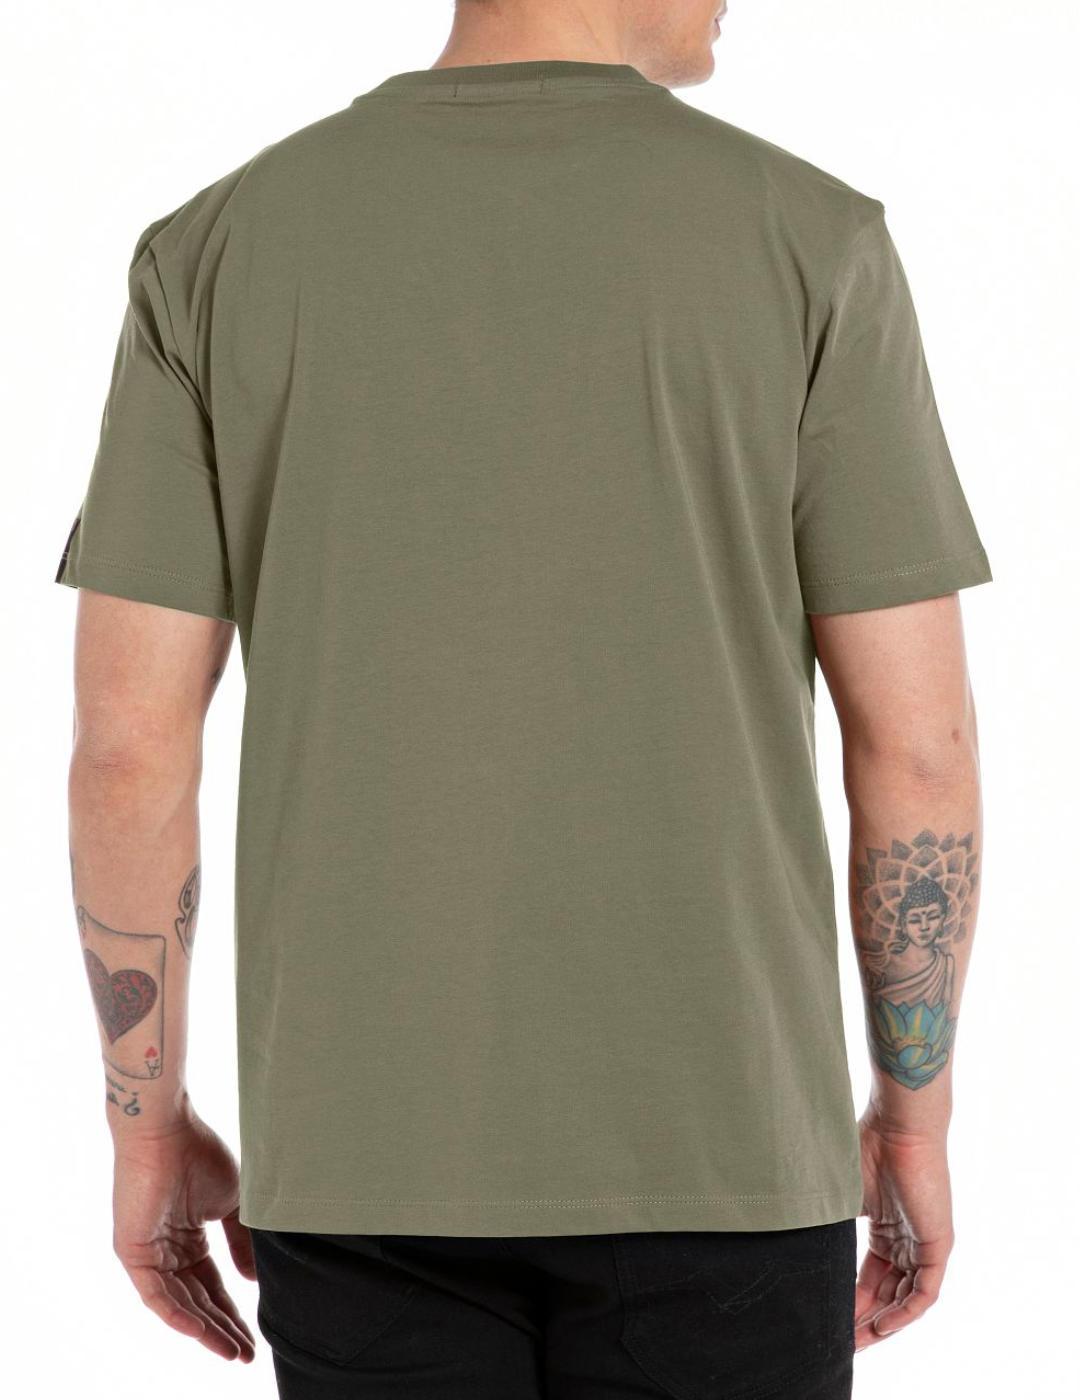 Camiseta Replay verde militar manga corta para hombre